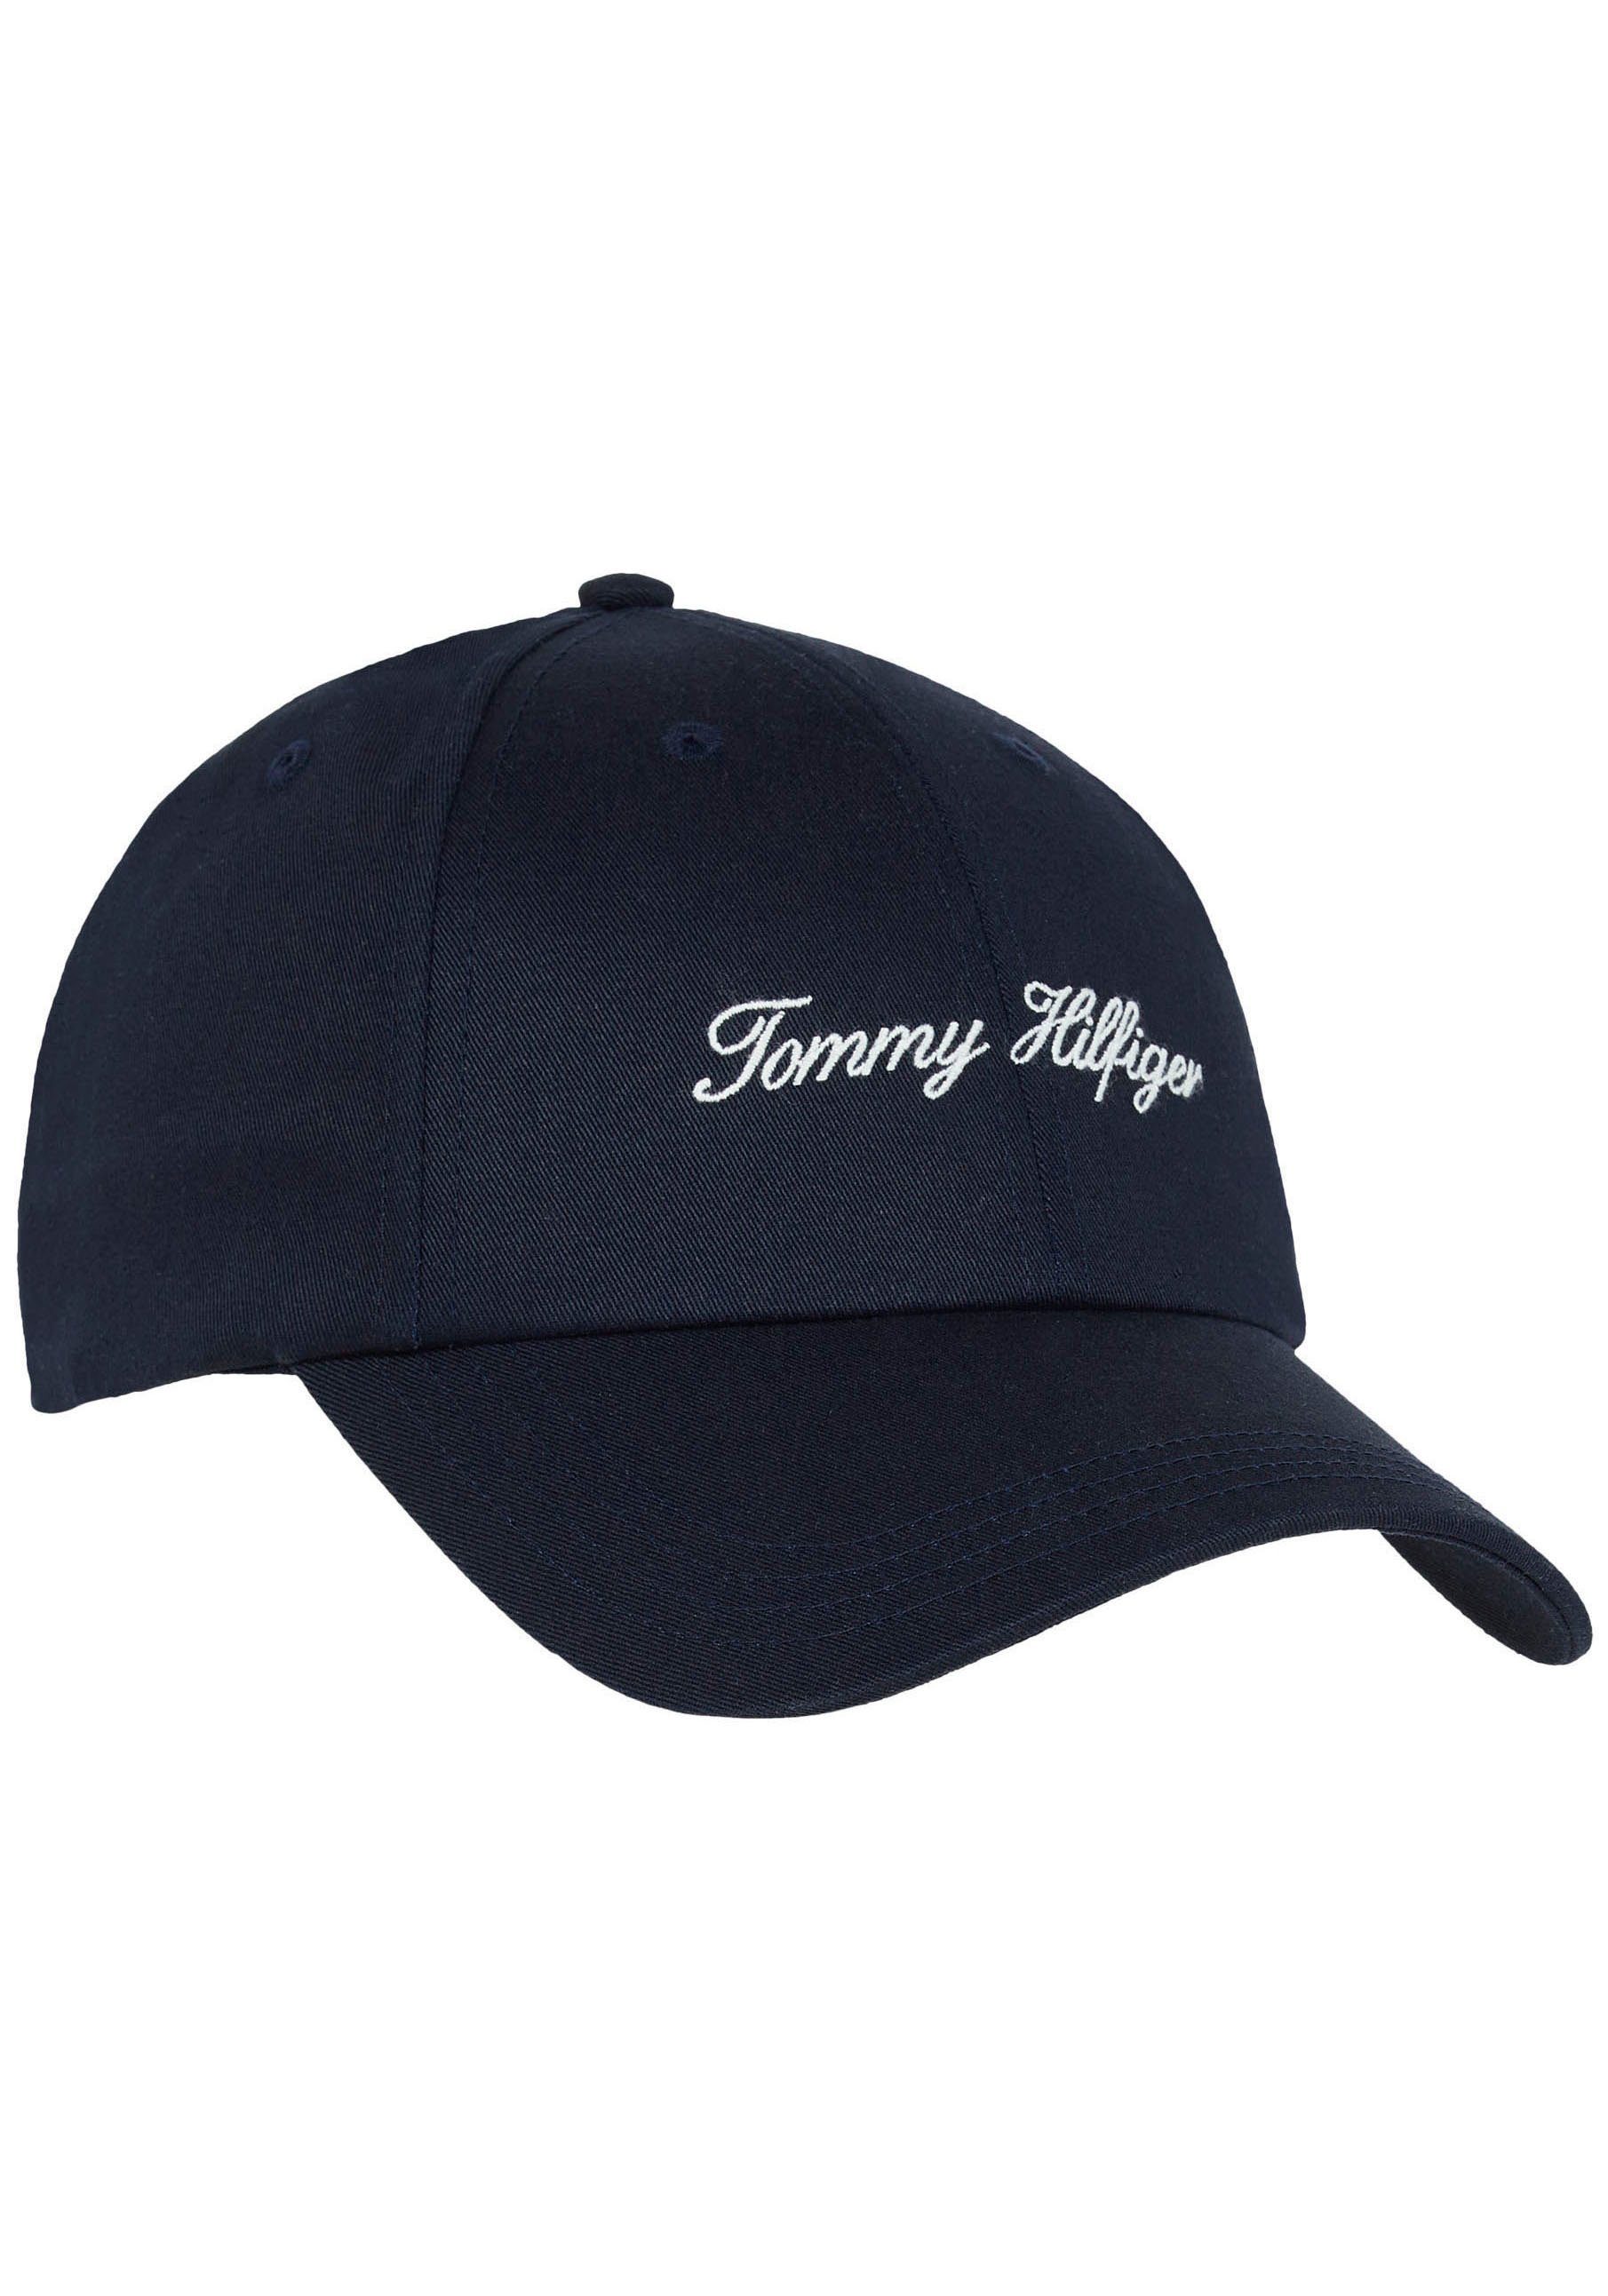 Branding CAP TWIST Baseball dezentem Blue TOMMY Hilfiger mit Cap Space Tommy